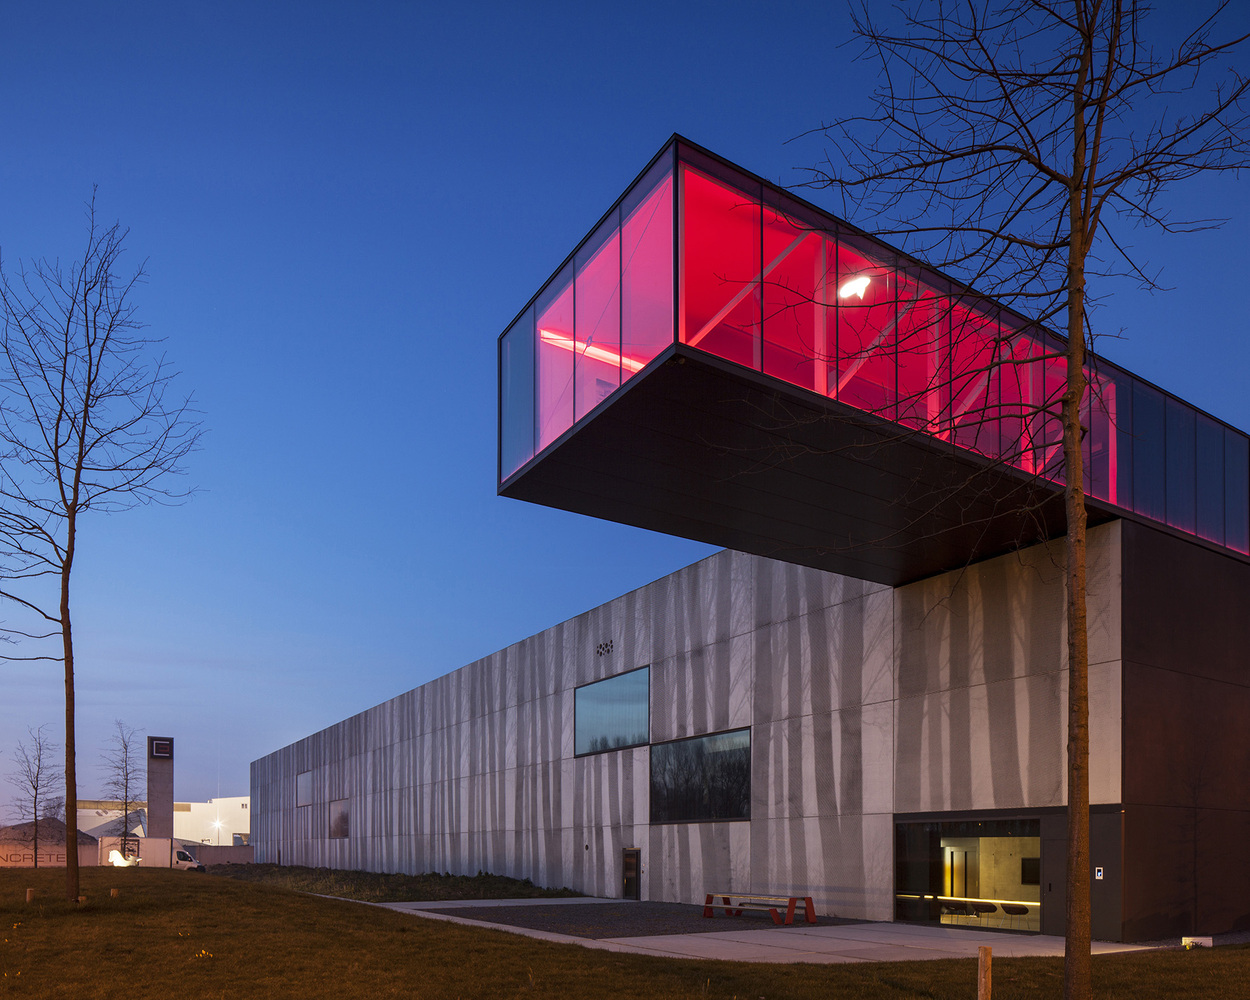 Необычное здание от Govaert & Vanhoutte Architects: бетон в гармонии с природой